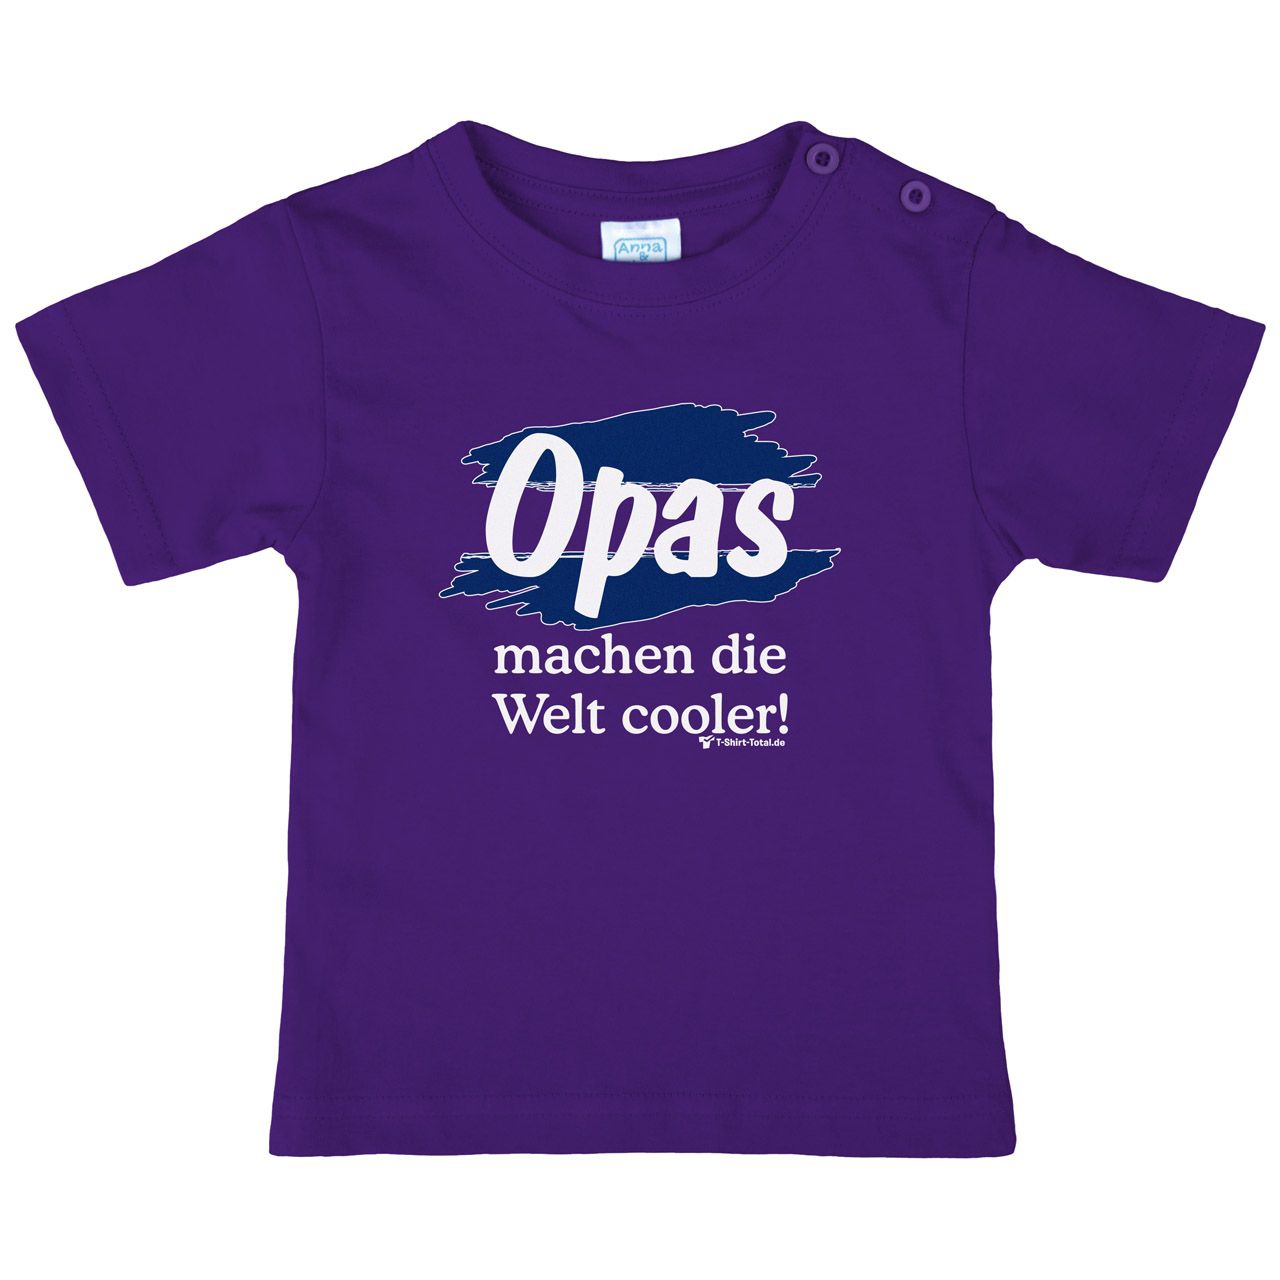 Welt cooler Opa Kinder T-Shirt lila 92